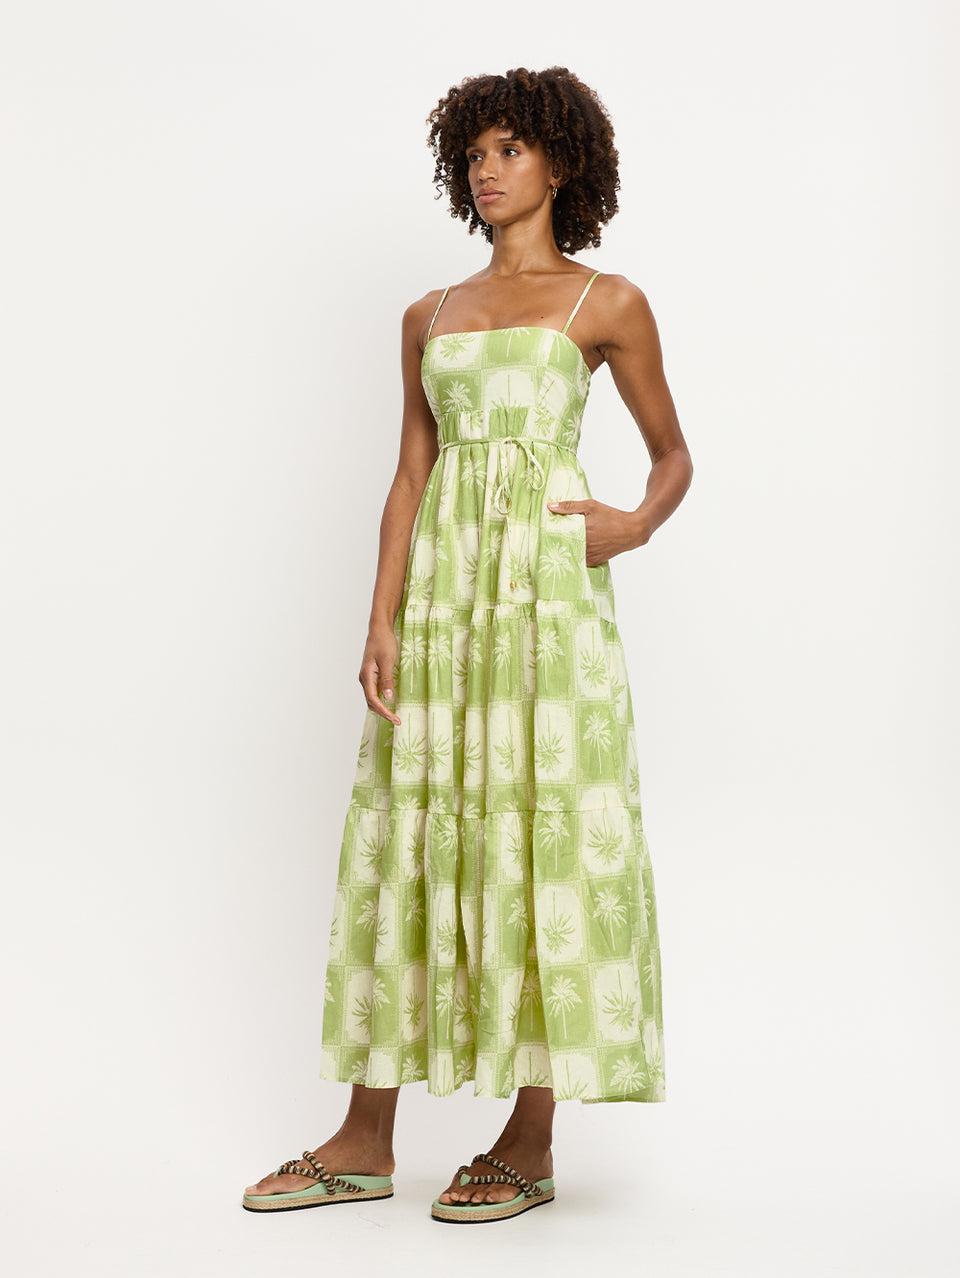 Paradiso Maxi Dress KIVARI | Model wears palm tree printed maxi dress side view